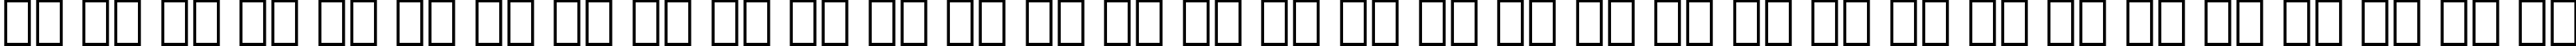 Пример написания русского алфавита шрифтом Futura Light Italic BT